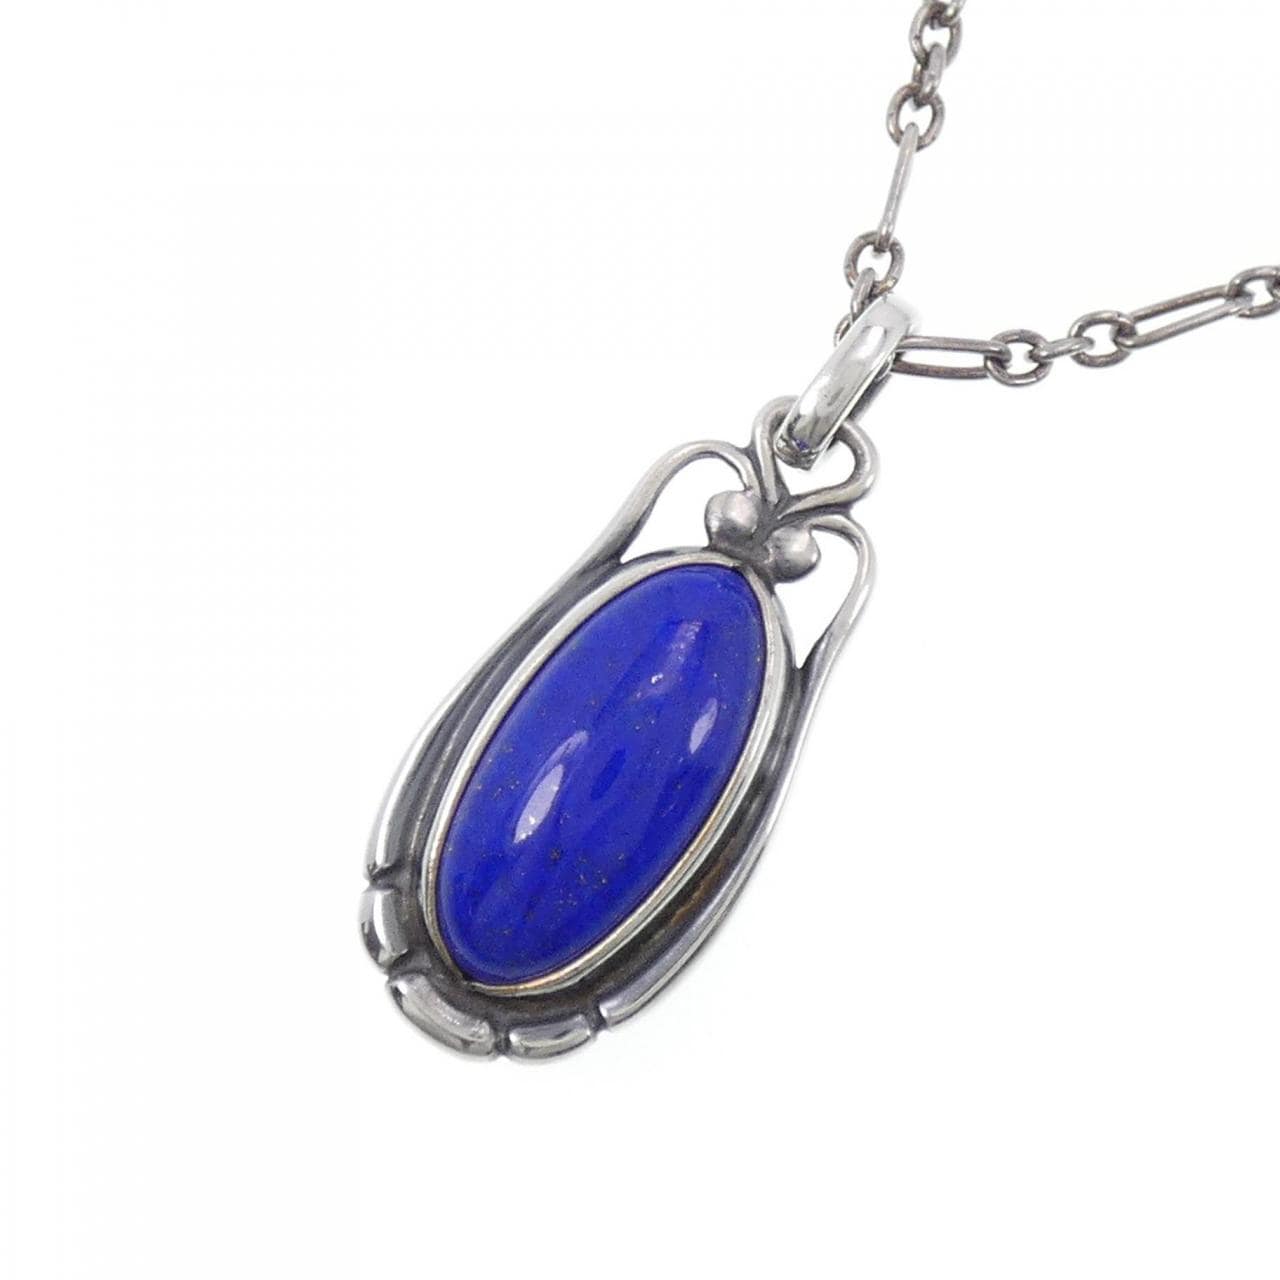 Georg Jensen lapis lazuli necklace